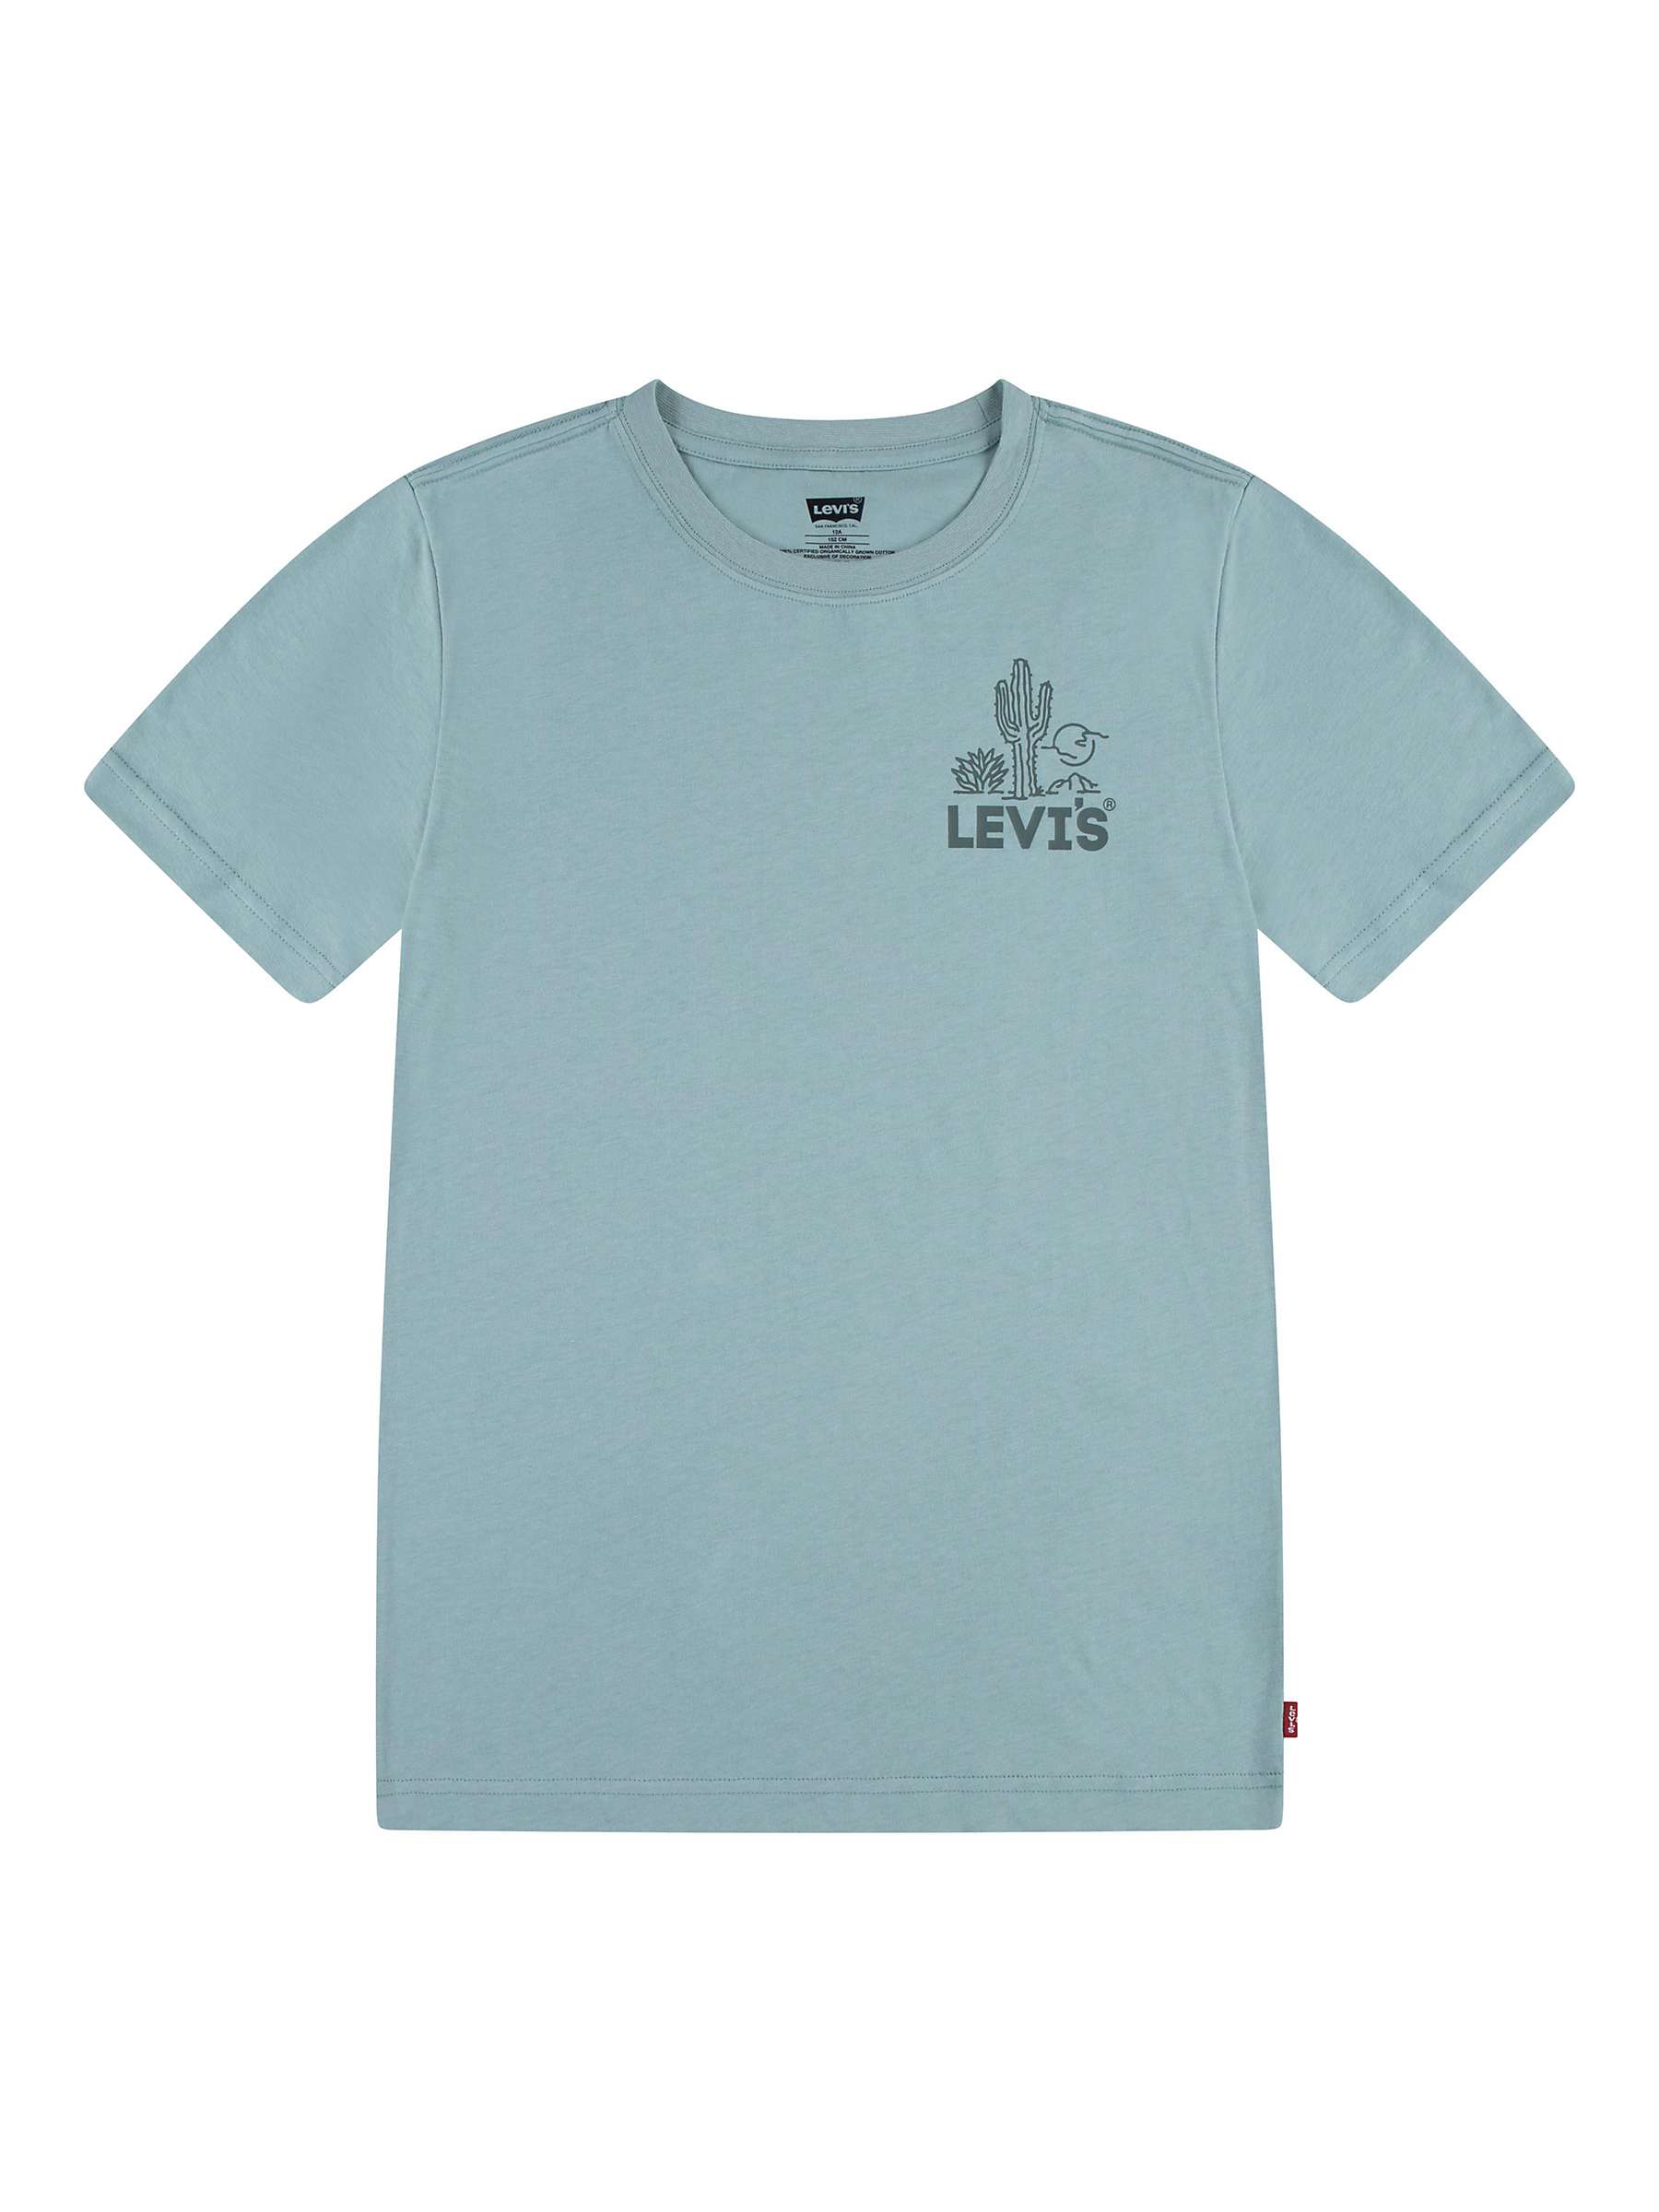 Buy Levi's Kids' Cacti Club Tee, Blue Surf Online at johnlewis.com